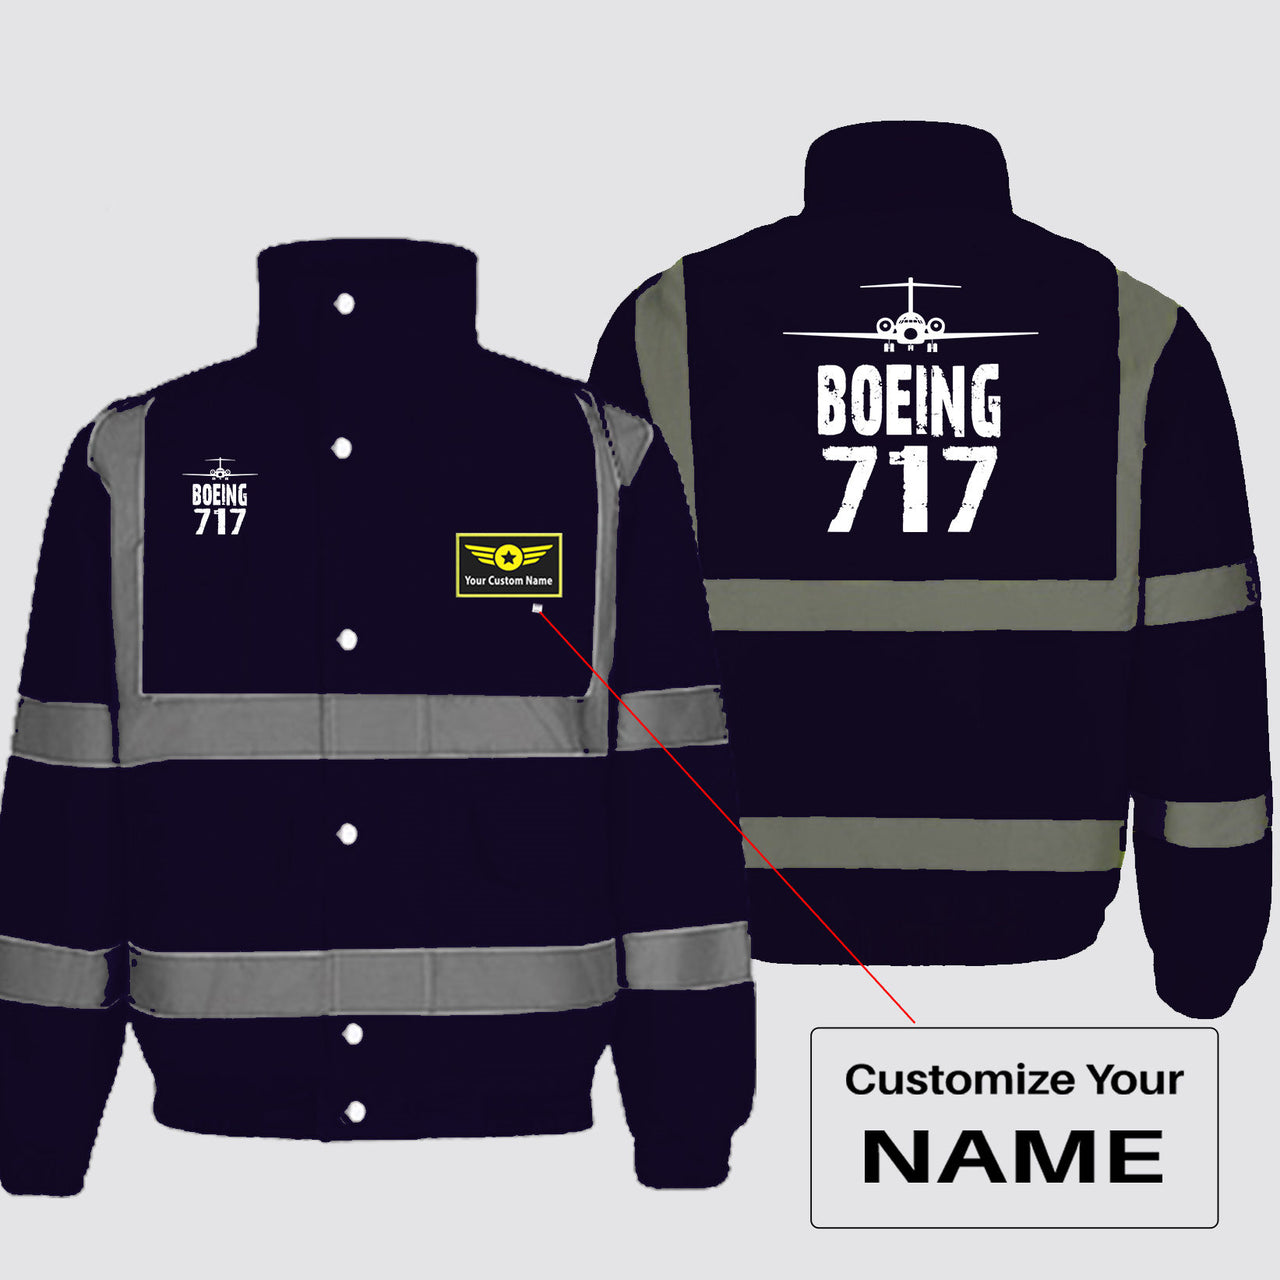 Boeing 717 & Plane Designed Reflective Winter Jackets